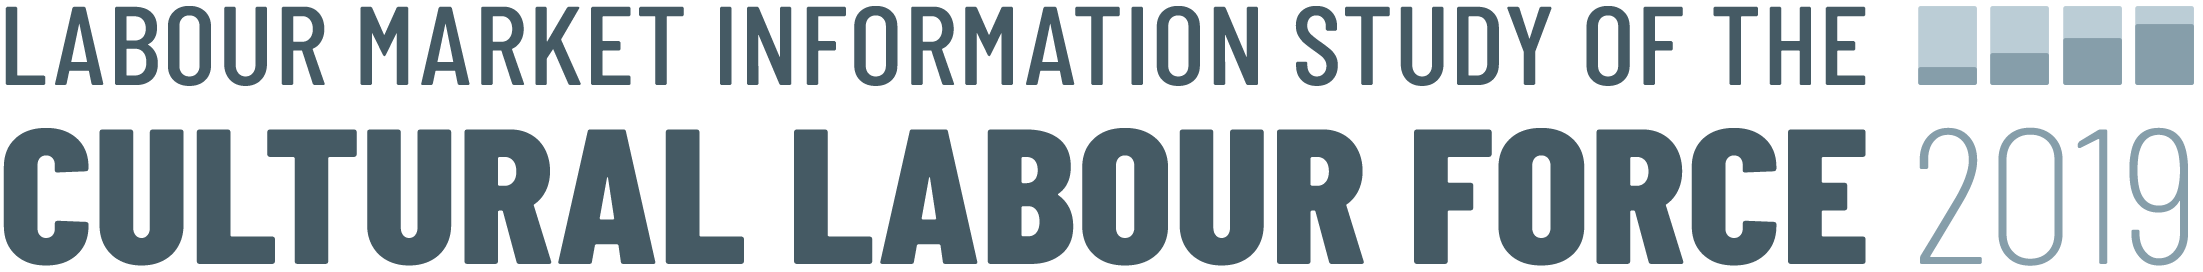 Labour Market Information Study of the Cultural Labour Force